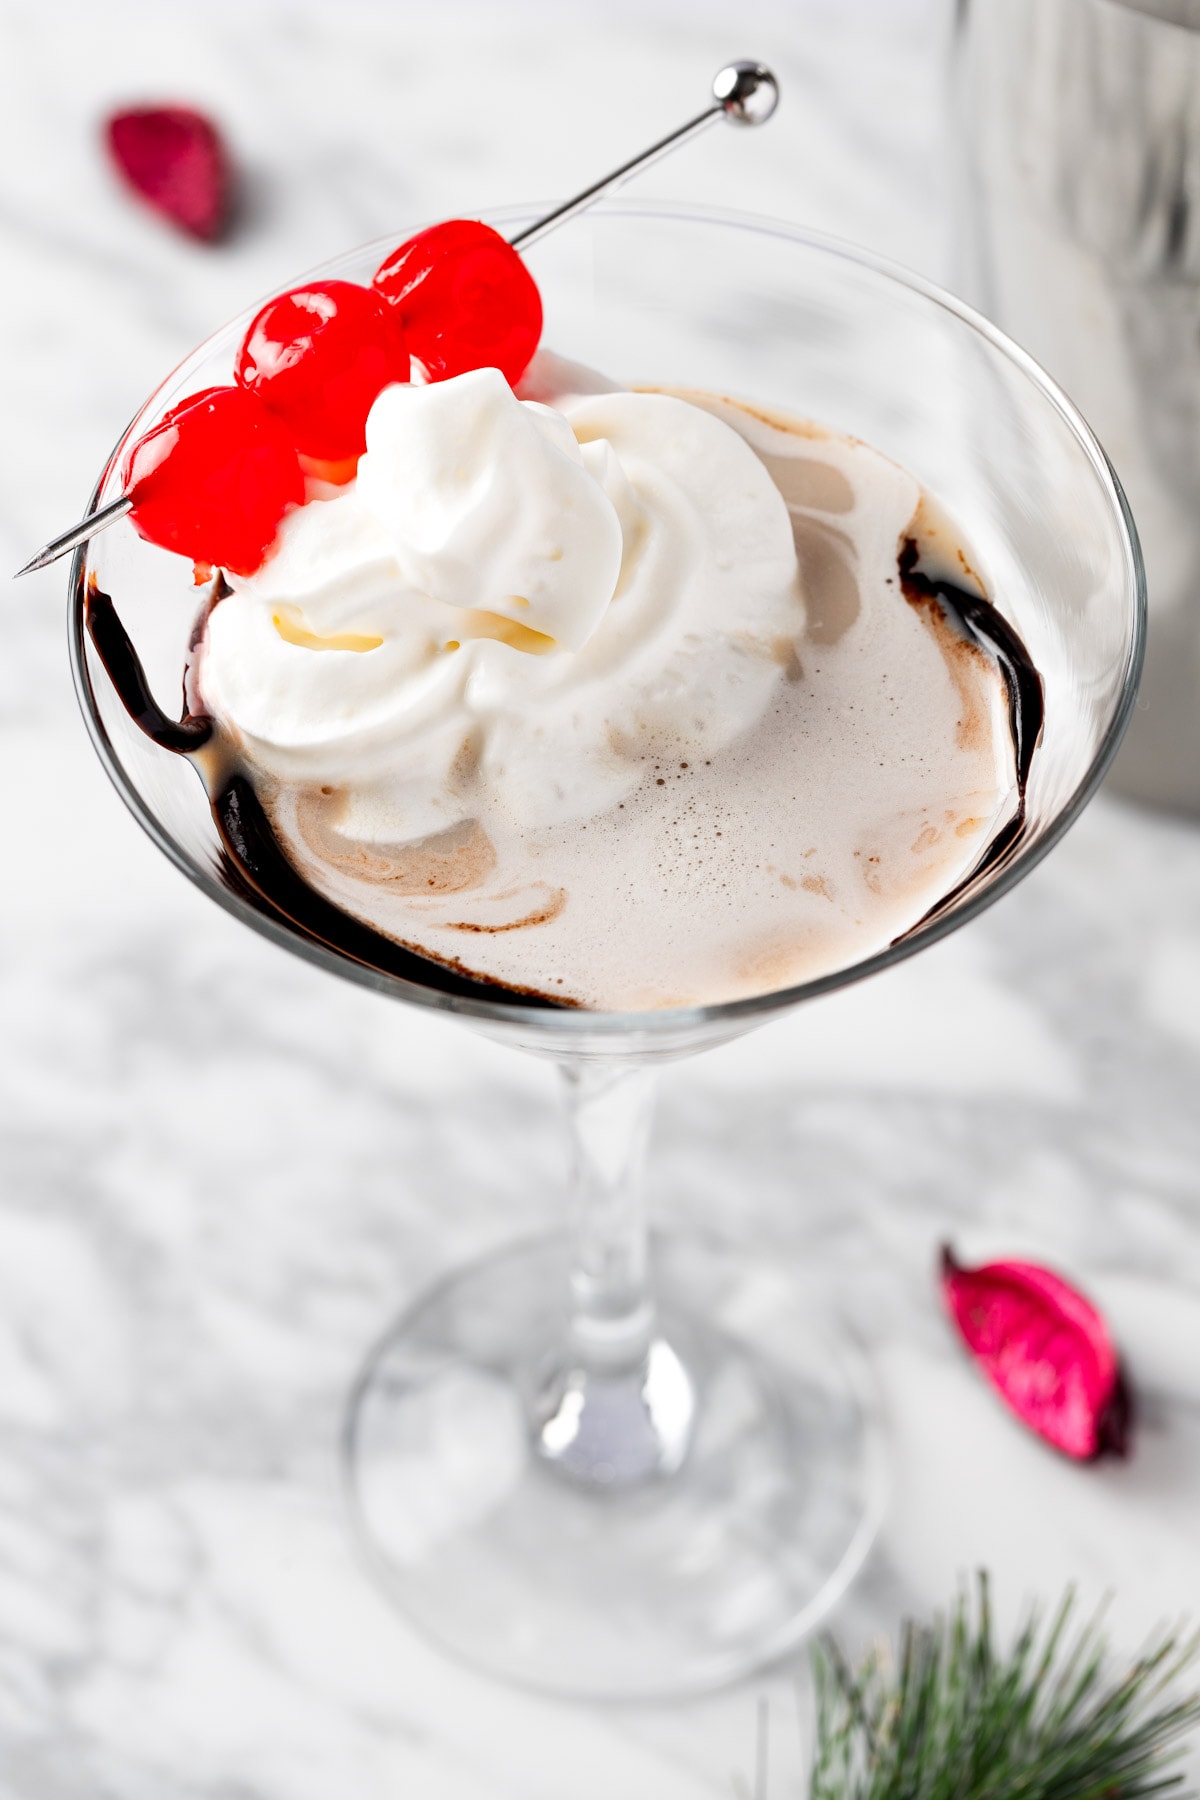 A cherry chocolate martini topped with whipped cream and maraschino cherries.